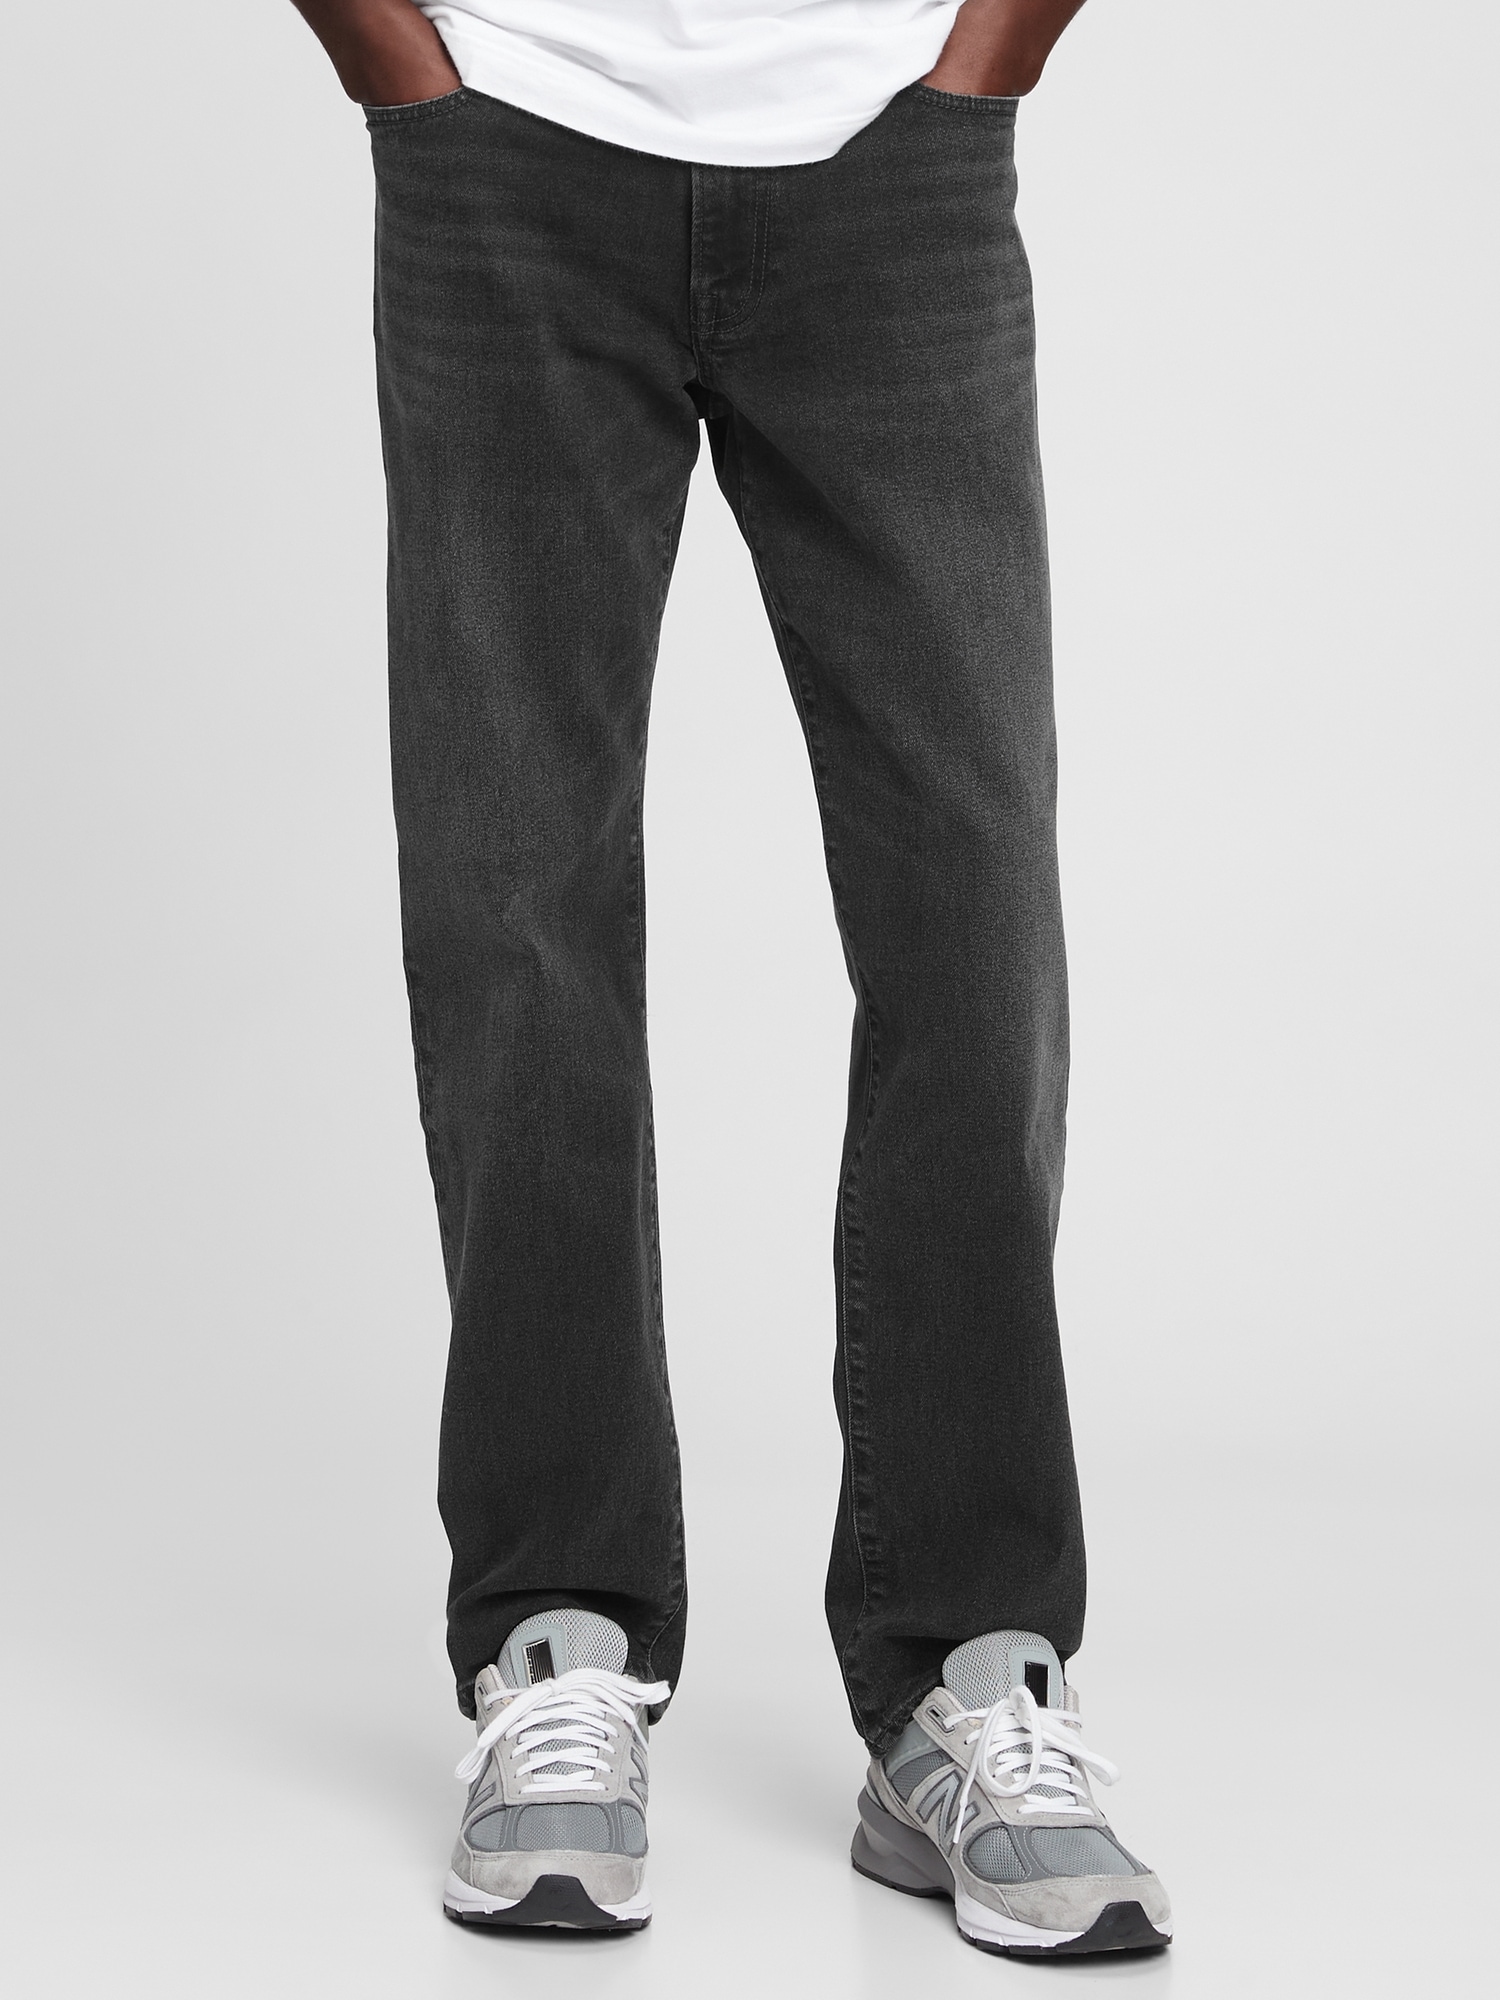 NEW GAP Men's 365TEMP Slim Performance Jeans in GapFlex Light Wash 30/32 NWT